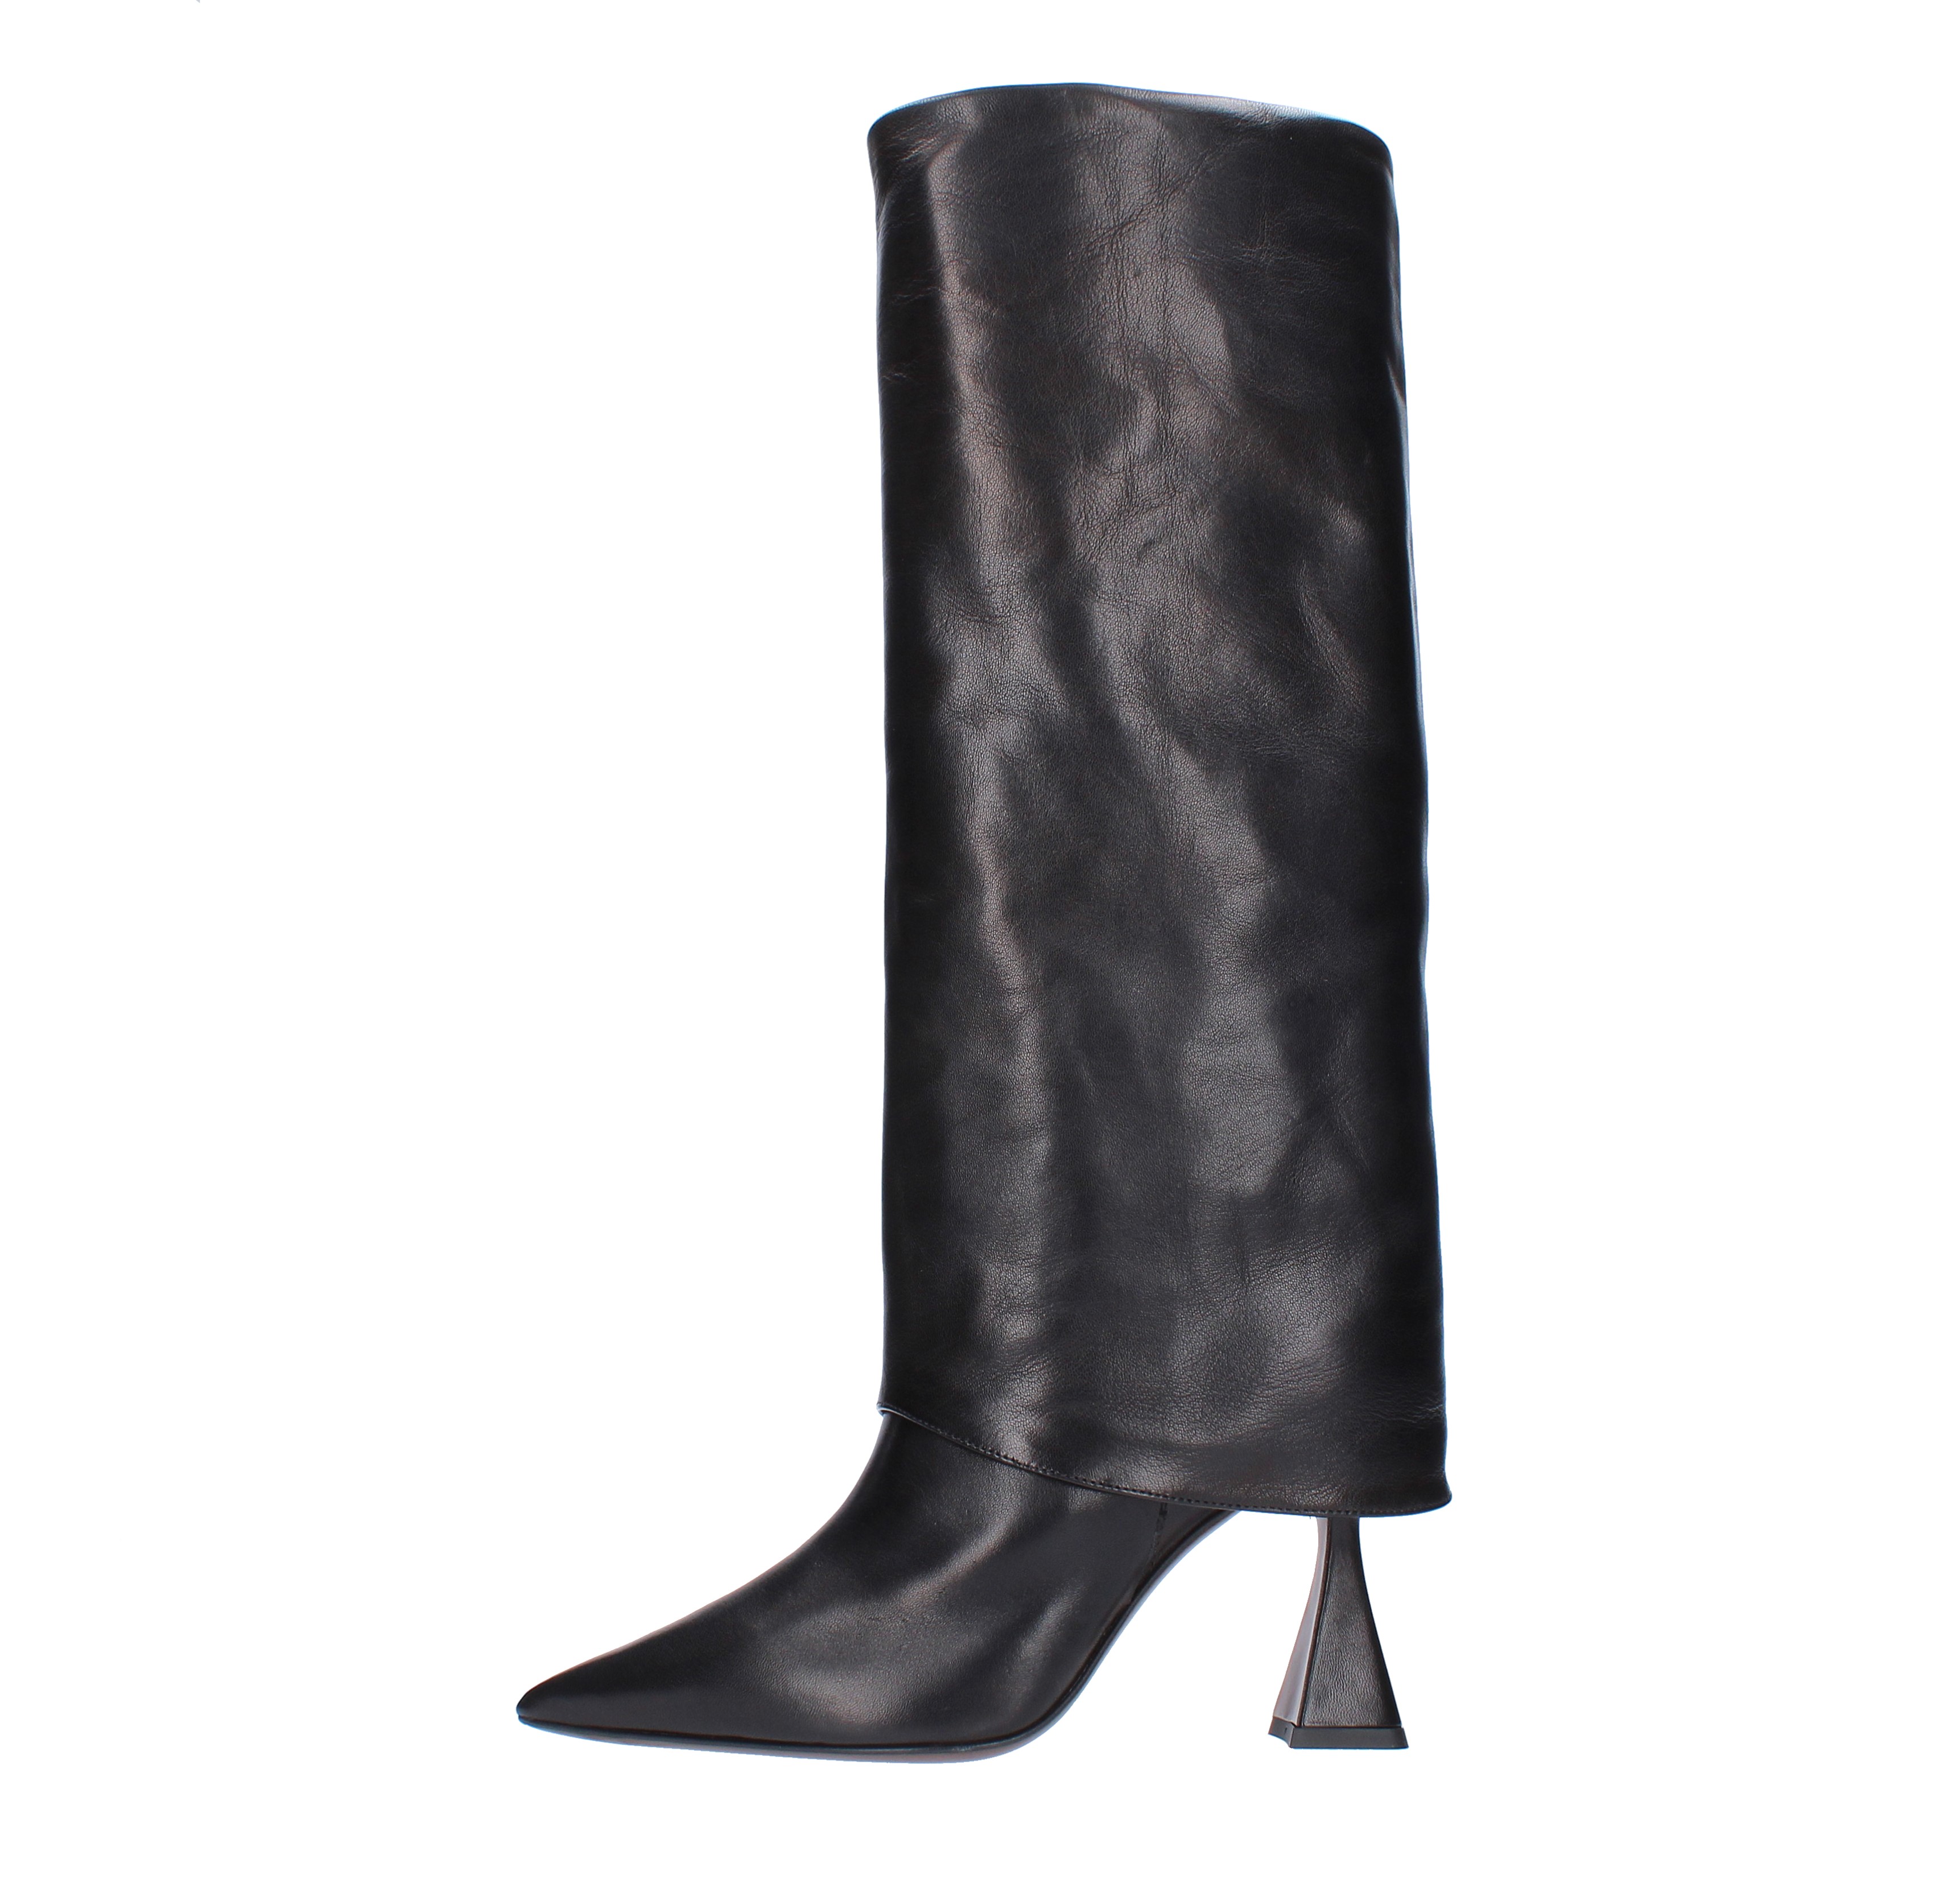 Boots Black - GIANNI RENZI - Ginevra calzature